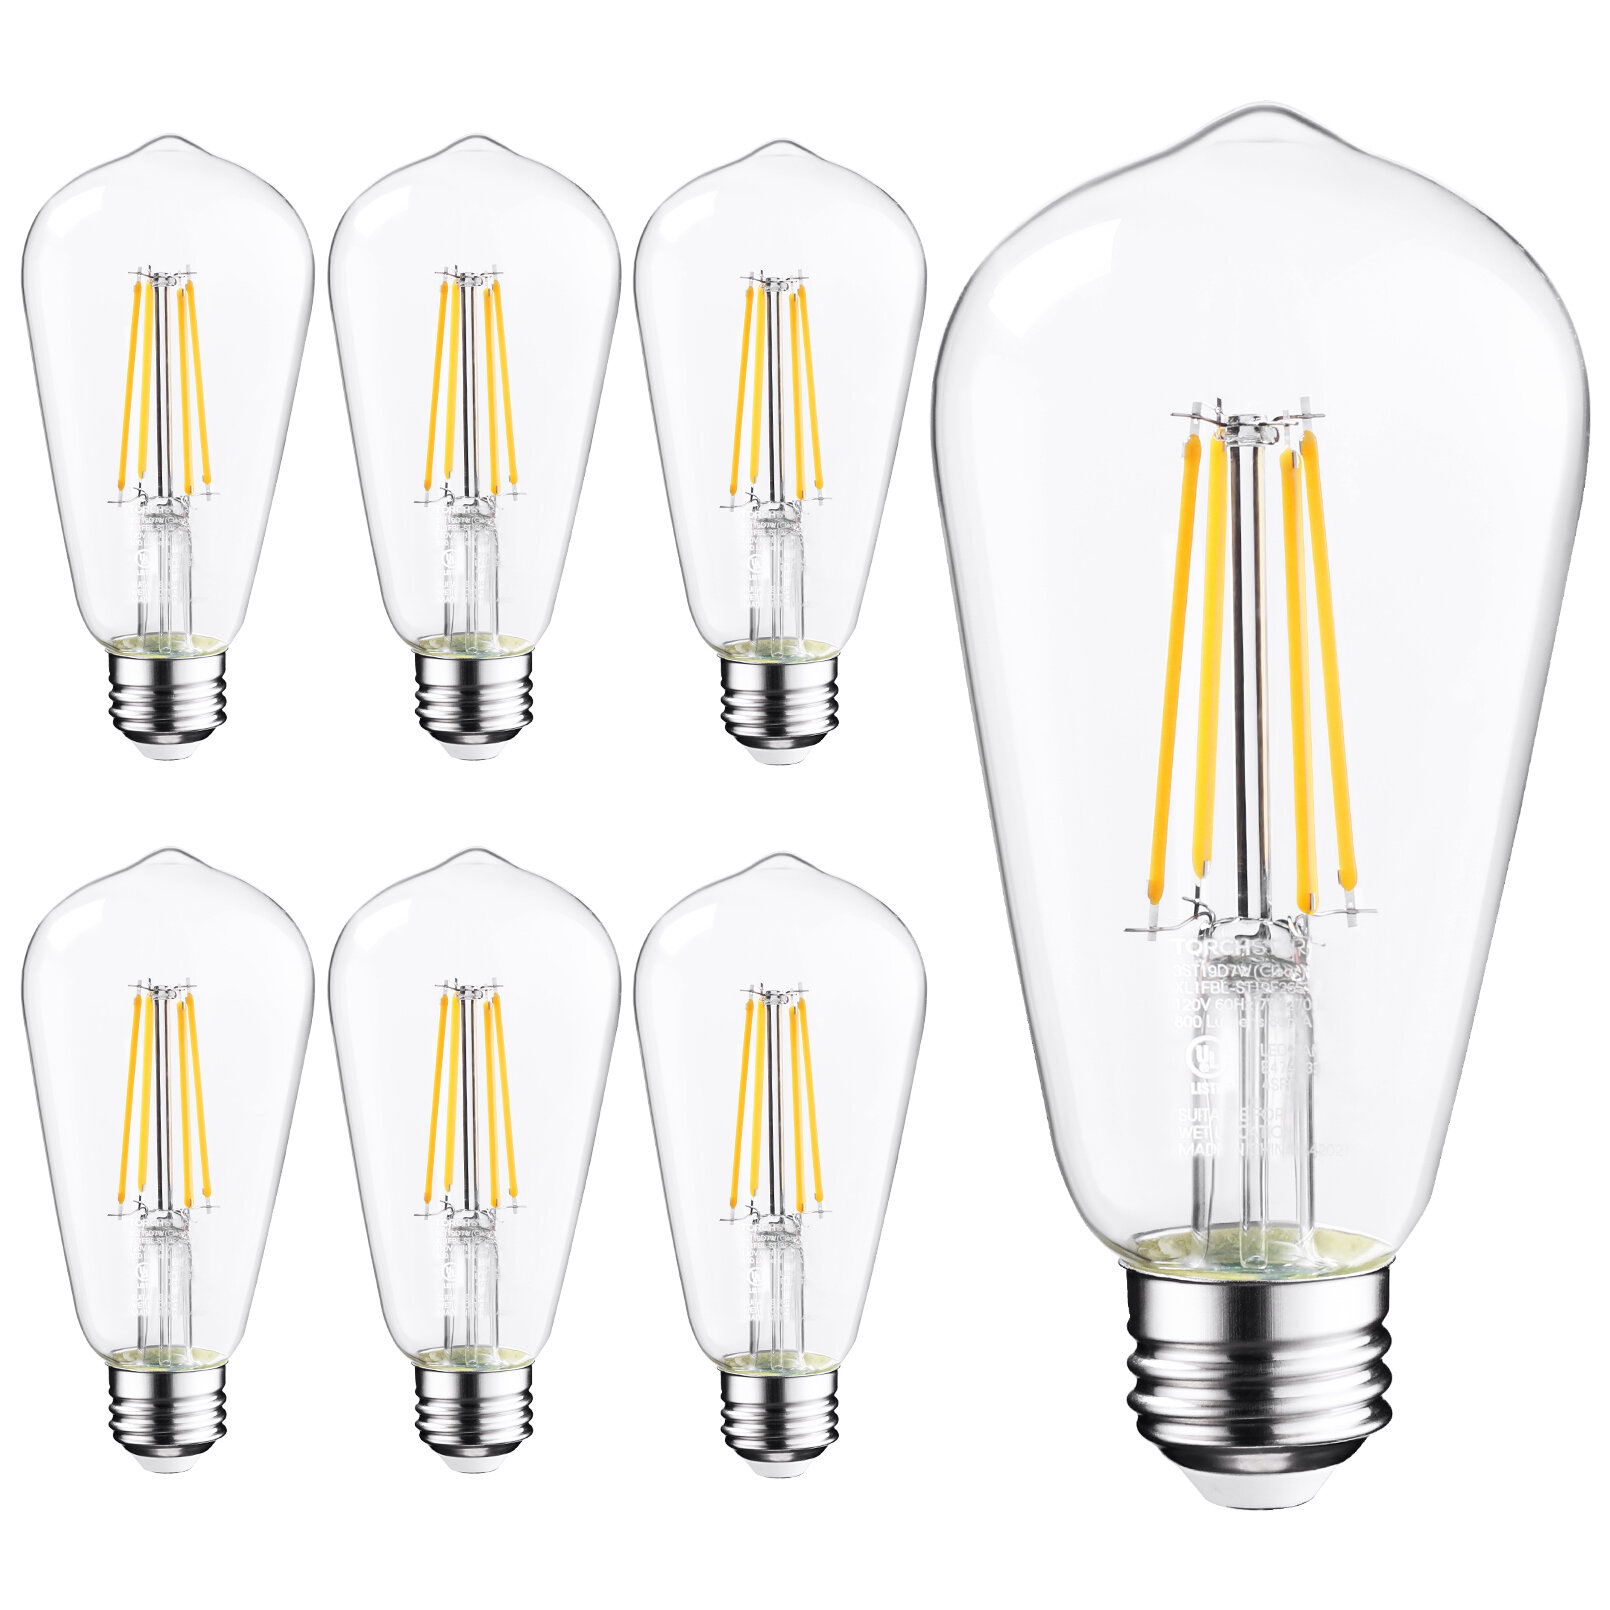 ST19 Dimmable LED 7W(75W Eqv.) Filament Light Bulb, E26 Base, 800LM, UL  Listed, 2700K